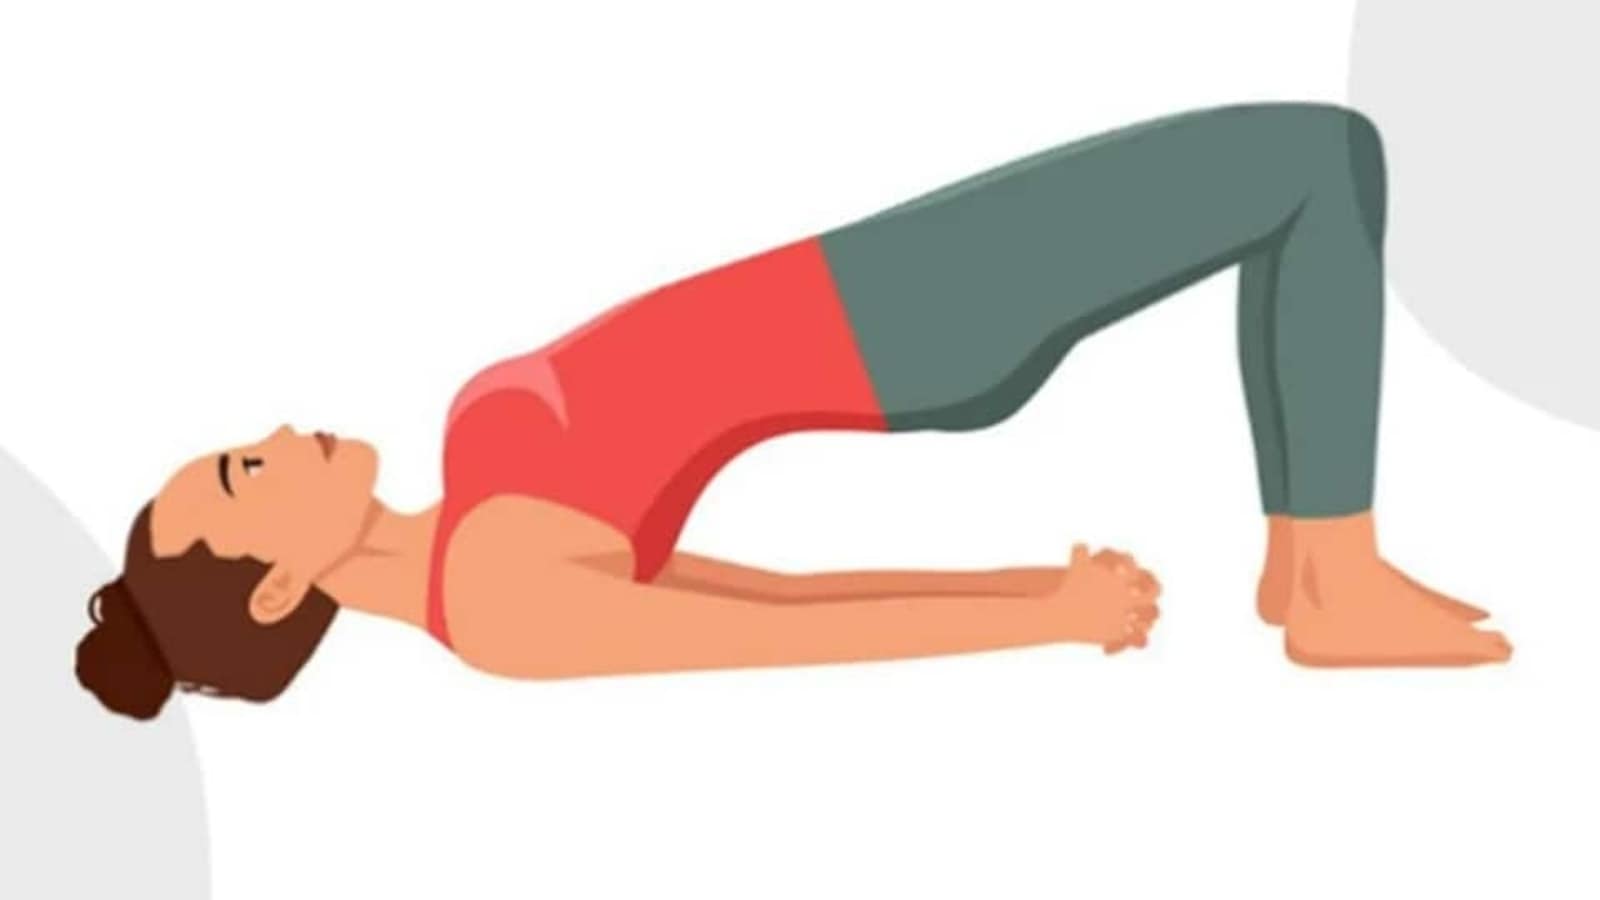 10 Yoga Poses That Can Improve Digestion and Sleep | YogaClub